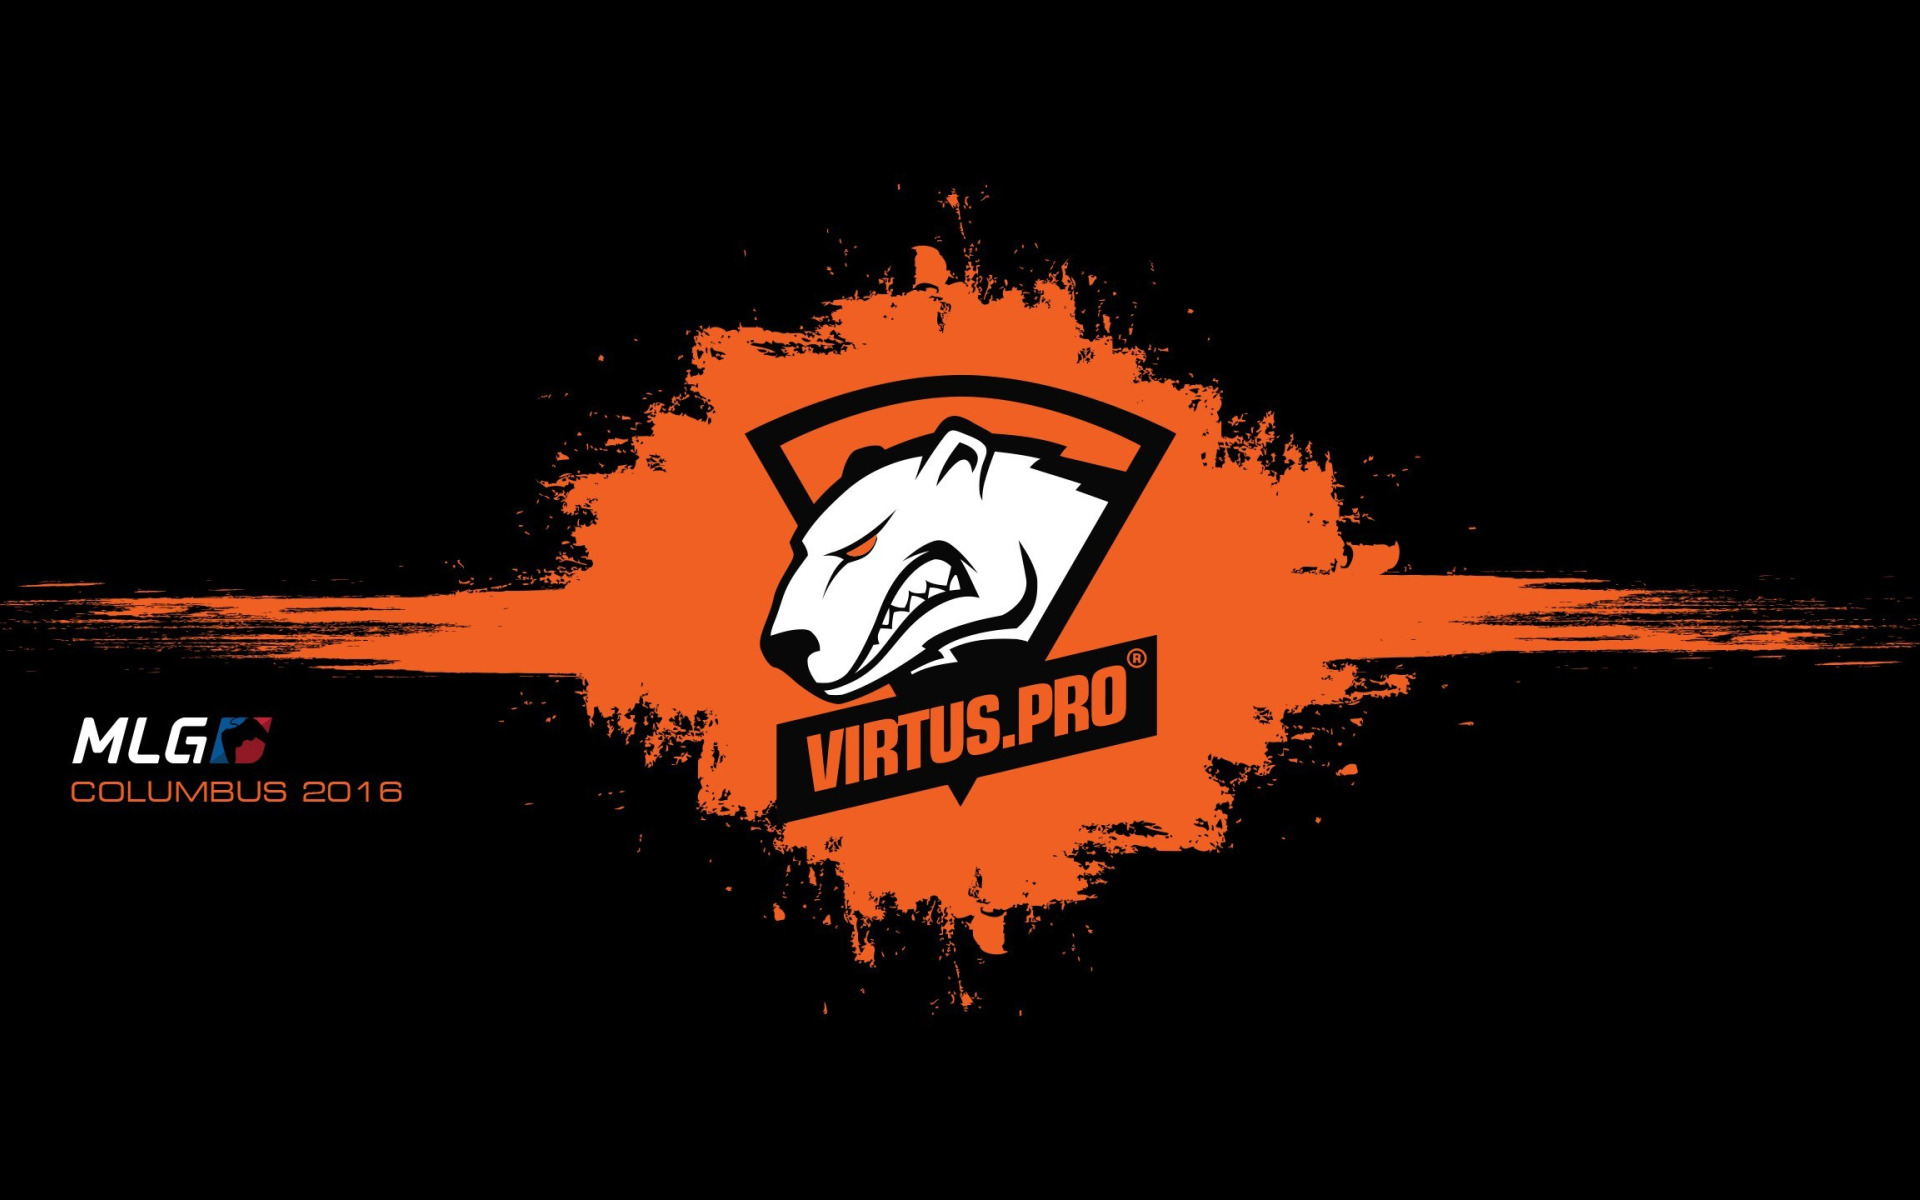 КС го Virtus Pro. Virtus Pro CS go logo. Vartu Pro. Virtus Pro обои на рабочий стол. Virtus pro cs 2